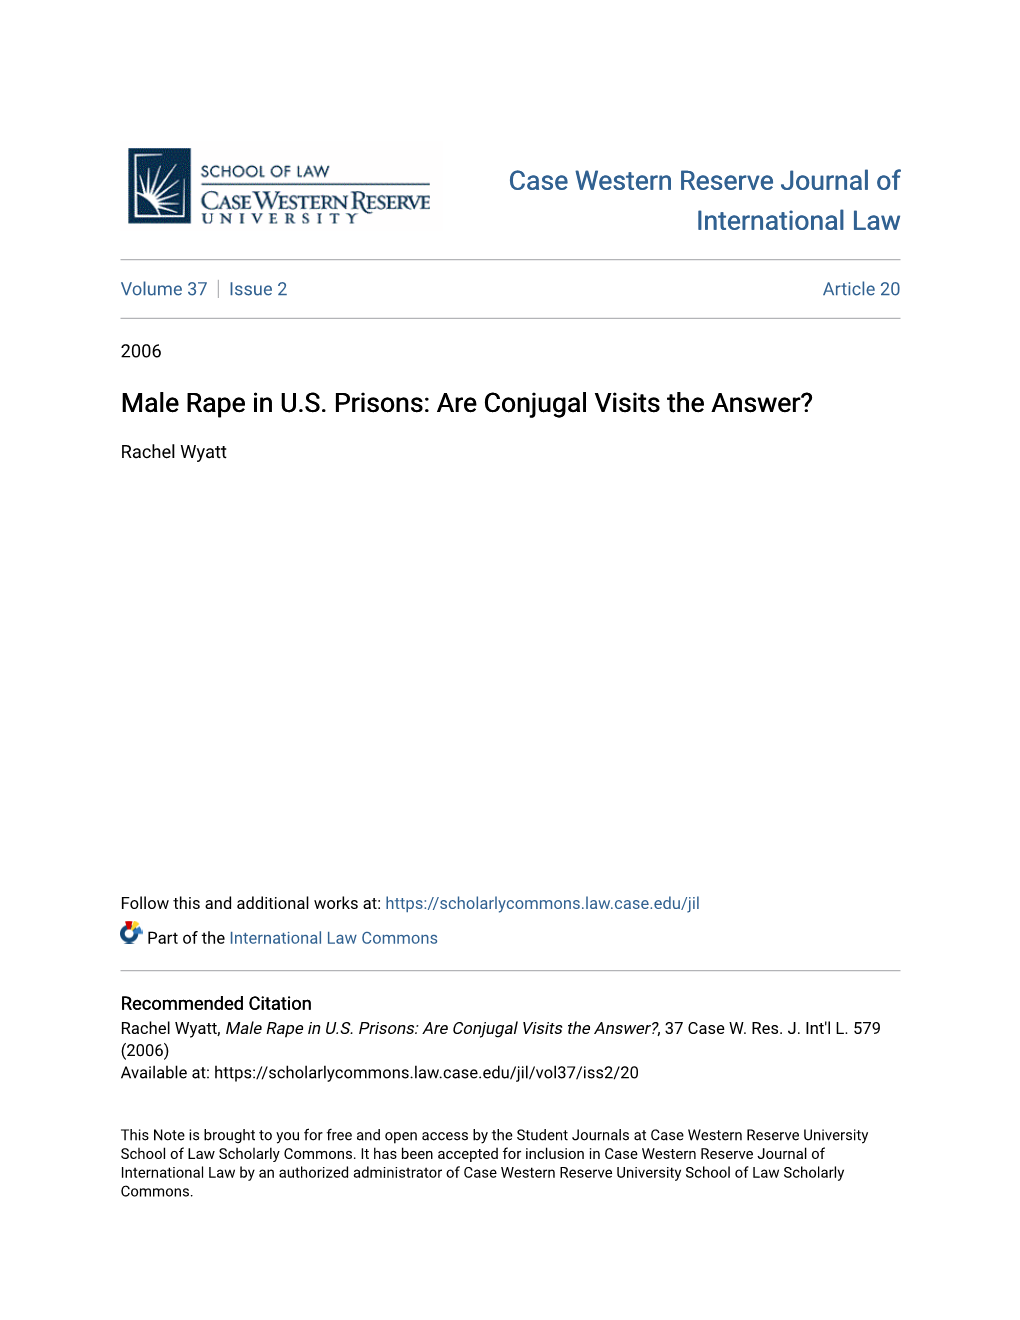 Male Rape in U.S. Prisons: Are Conjugal Visits the Answer?